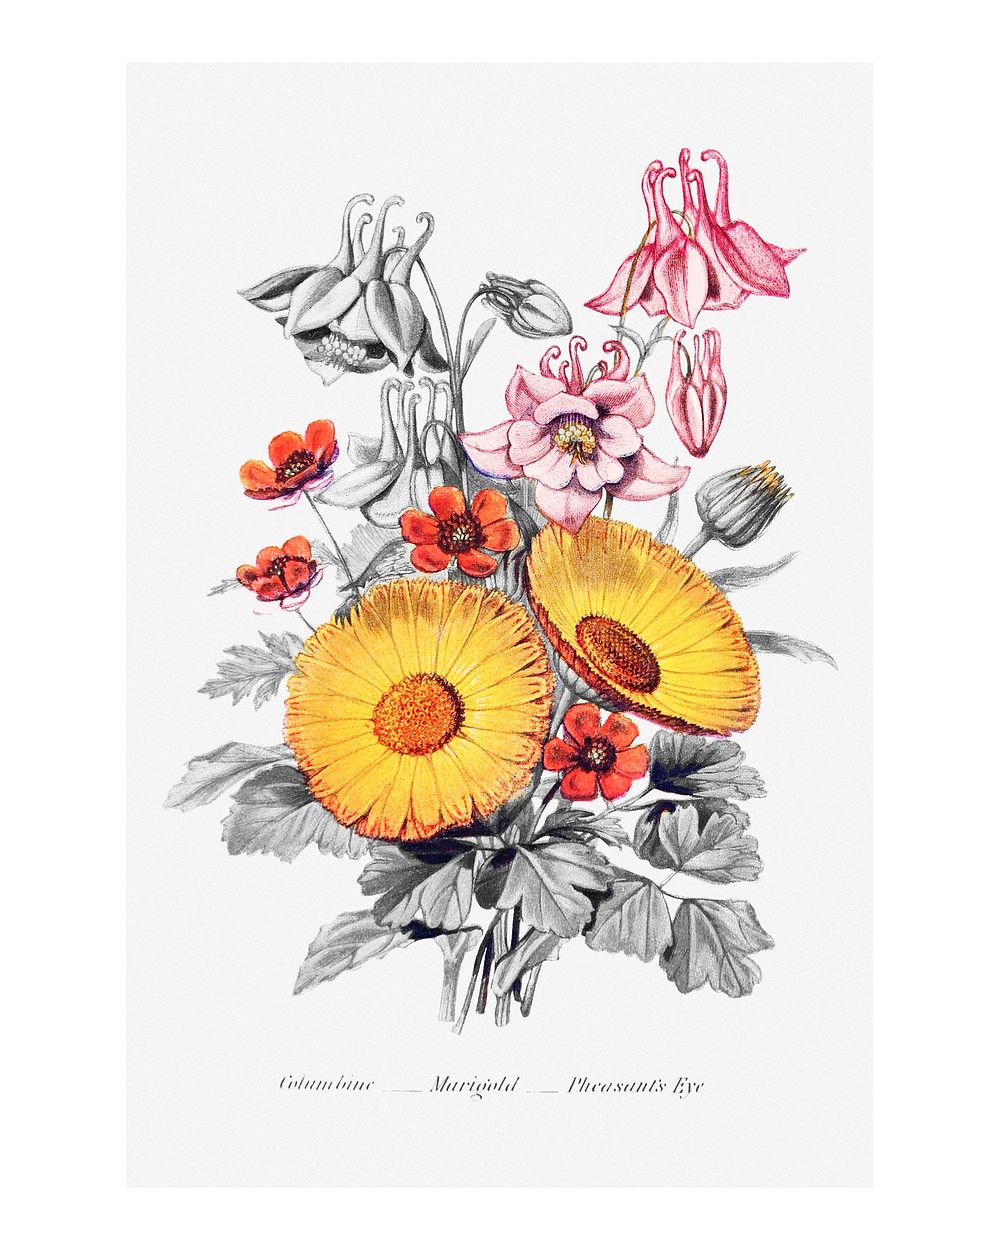 Flower bouquet vintage illustration wall art print and poster design remix from original artwork of Robert Tyas.